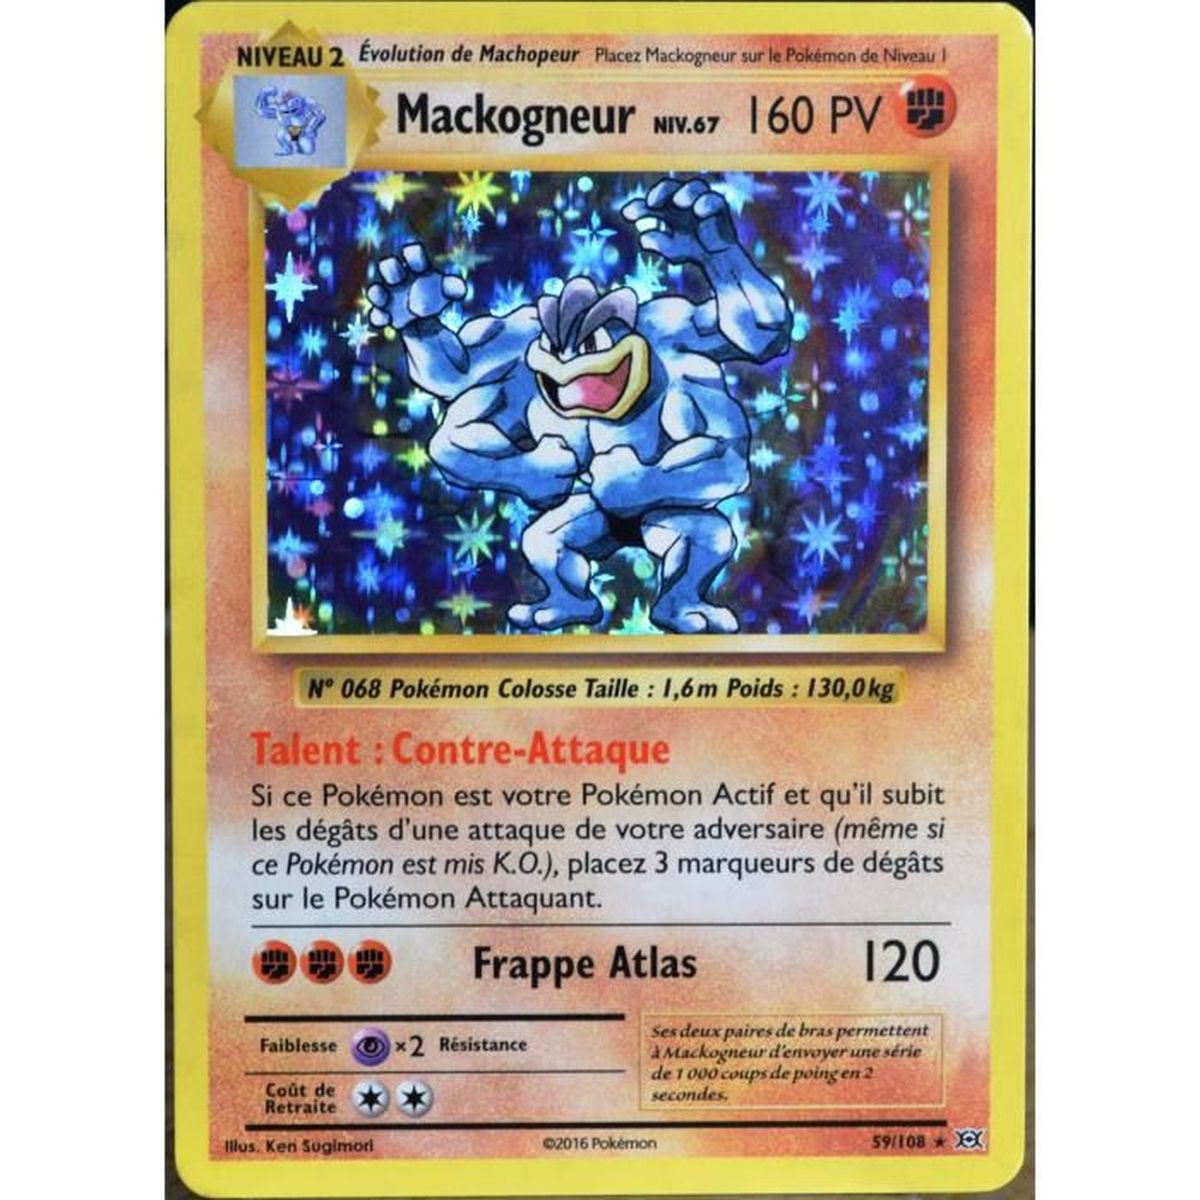 Carte Pokemon 59 108 Mackogneur Niv 67 160 Pv Holo Xy Evolutions Cdiscount Jeux Jouets